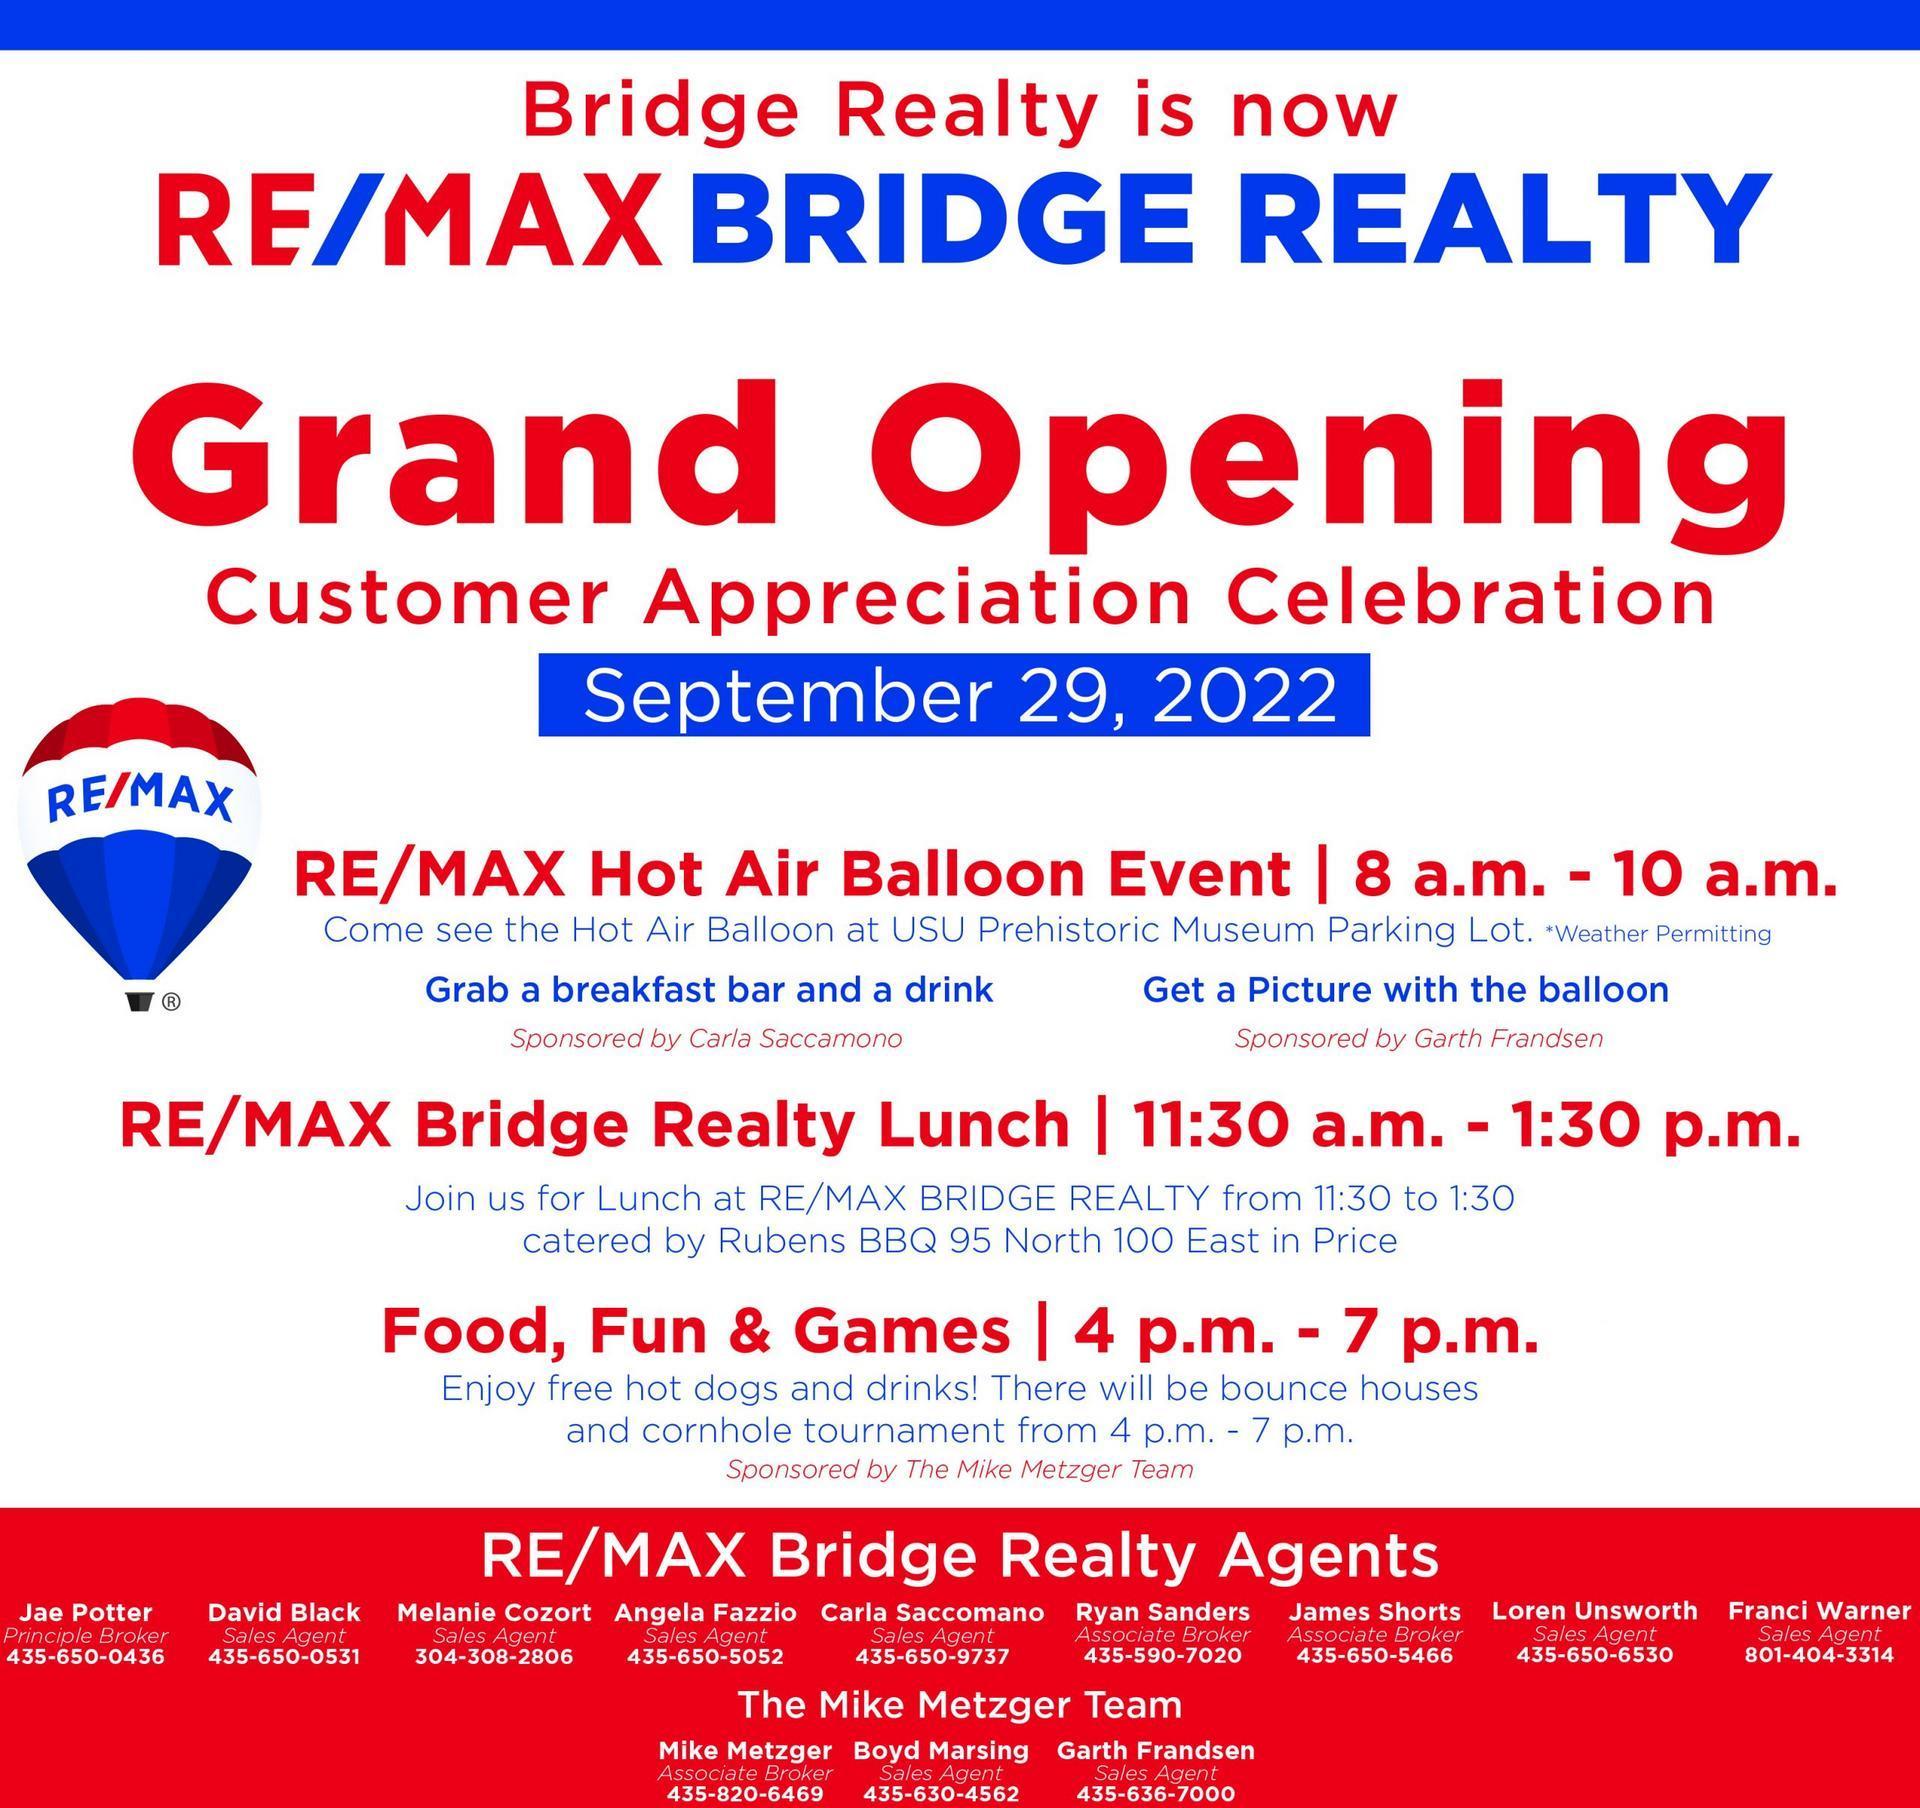 ReMax-Bridge-Realty-Grand-Opening-6x10-1-scaled.jpg